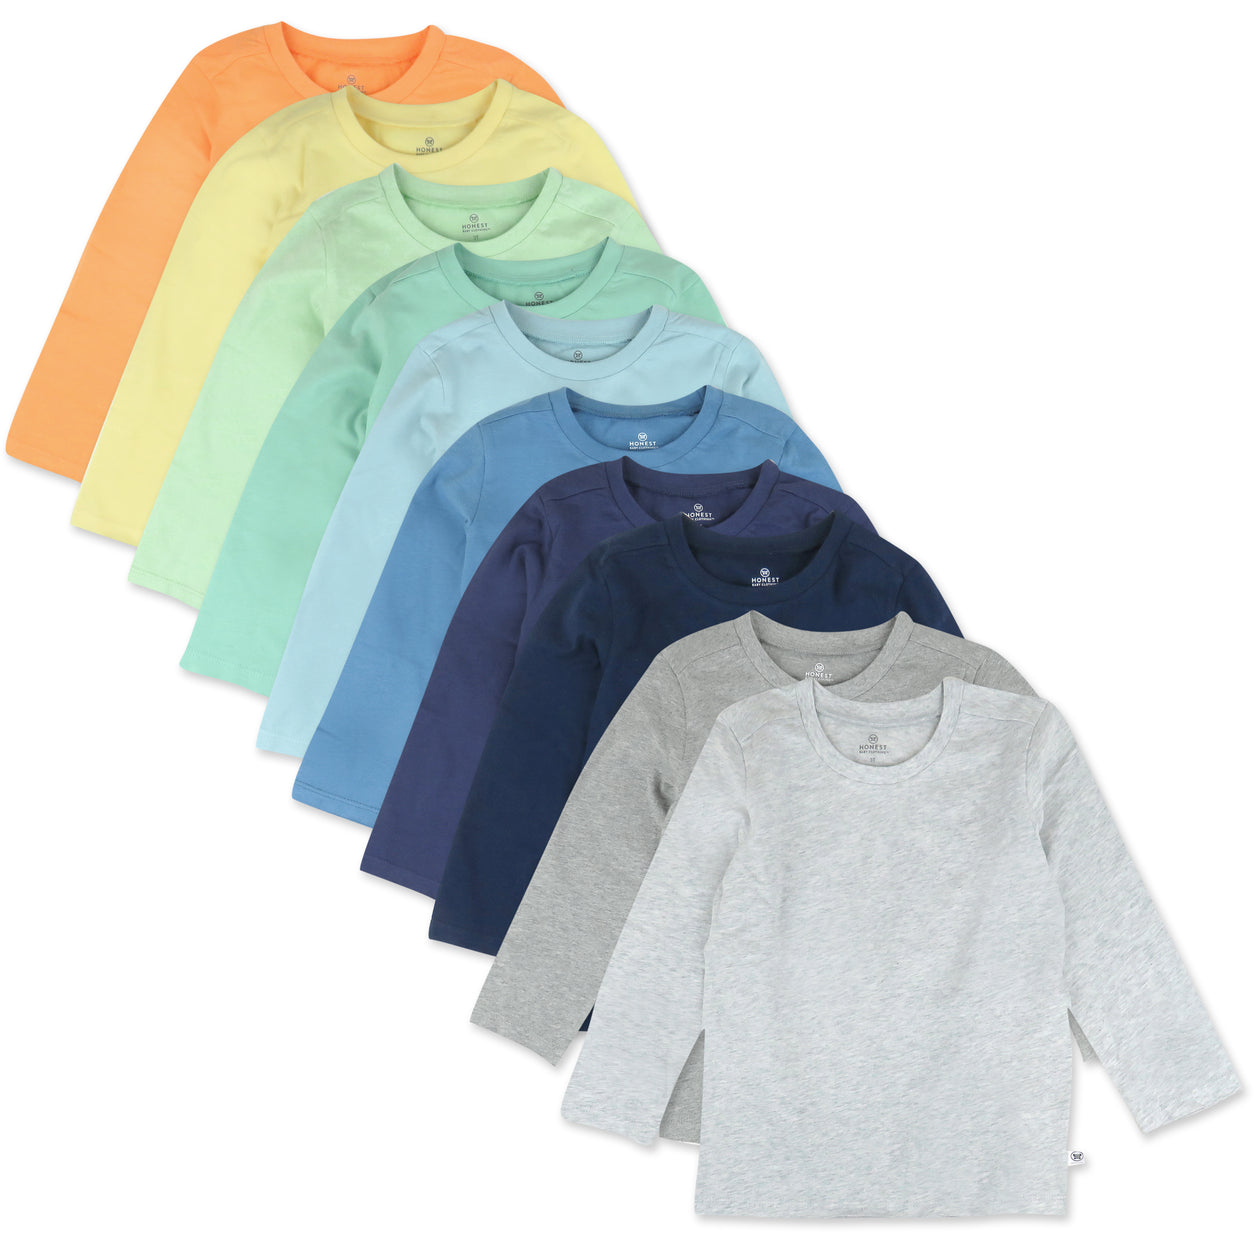 Kids long sleeved shirts - Girls tops & t-shirts | Shirts